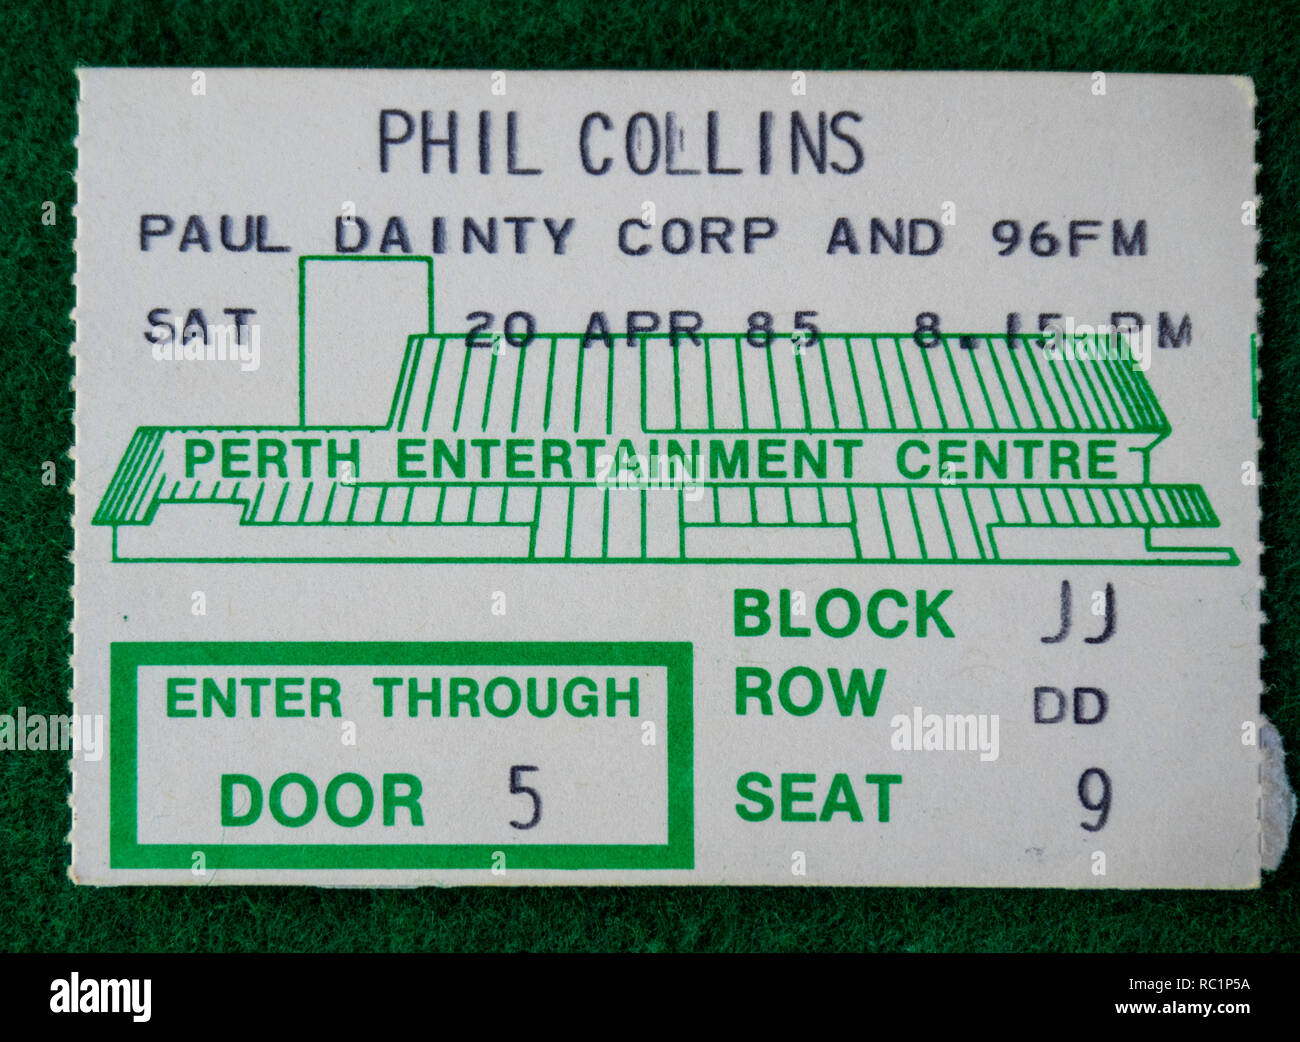 Ticket for Phil Collins concert at Perth Entertainment Centre in 1985 WA Australia. Stock Photo